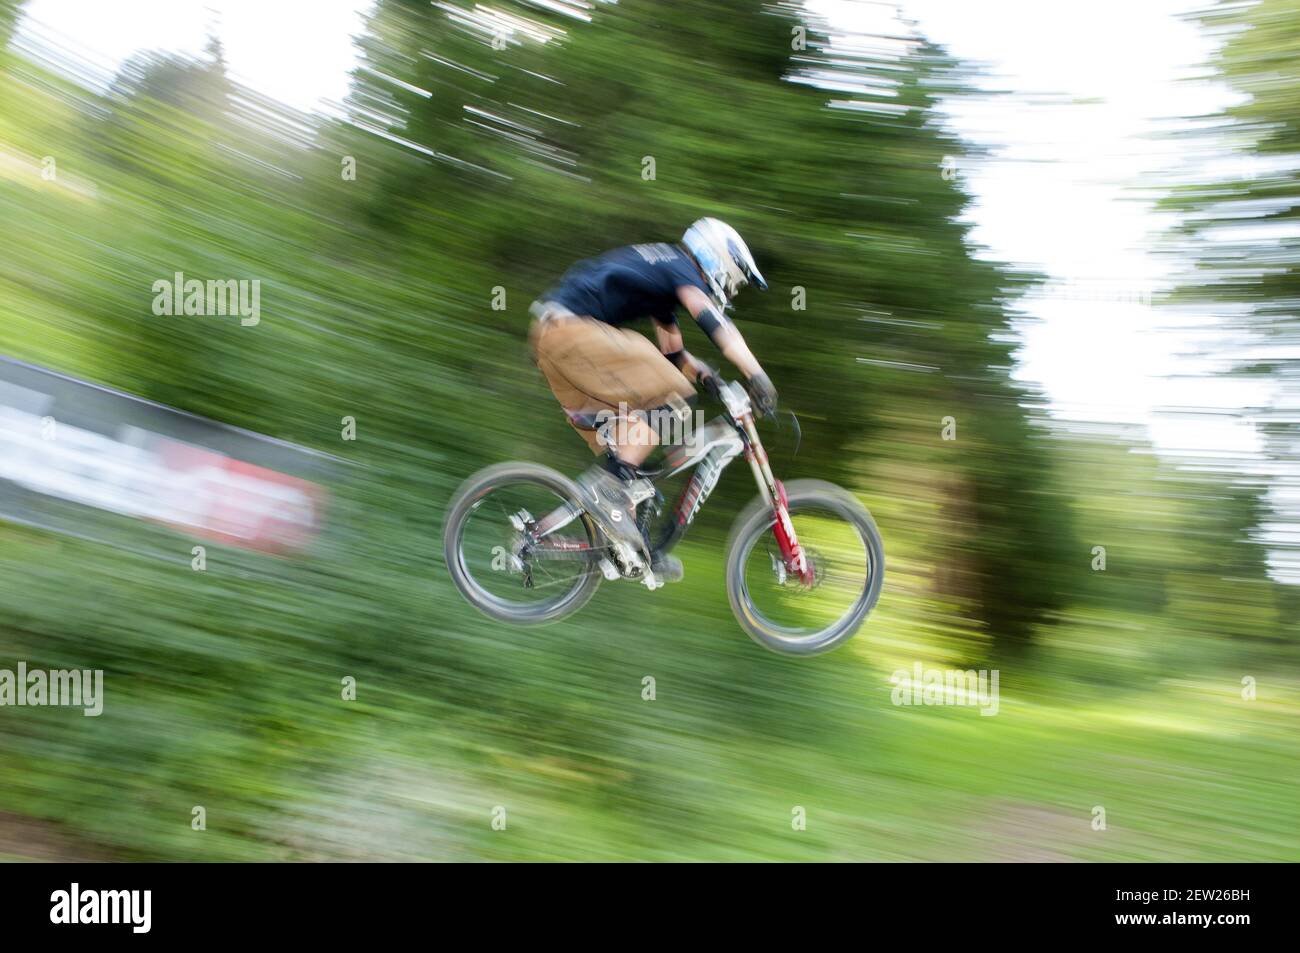 Switzerland, Canton of Valais, Morgins, downhill mountain biking in the resort Stock Photo